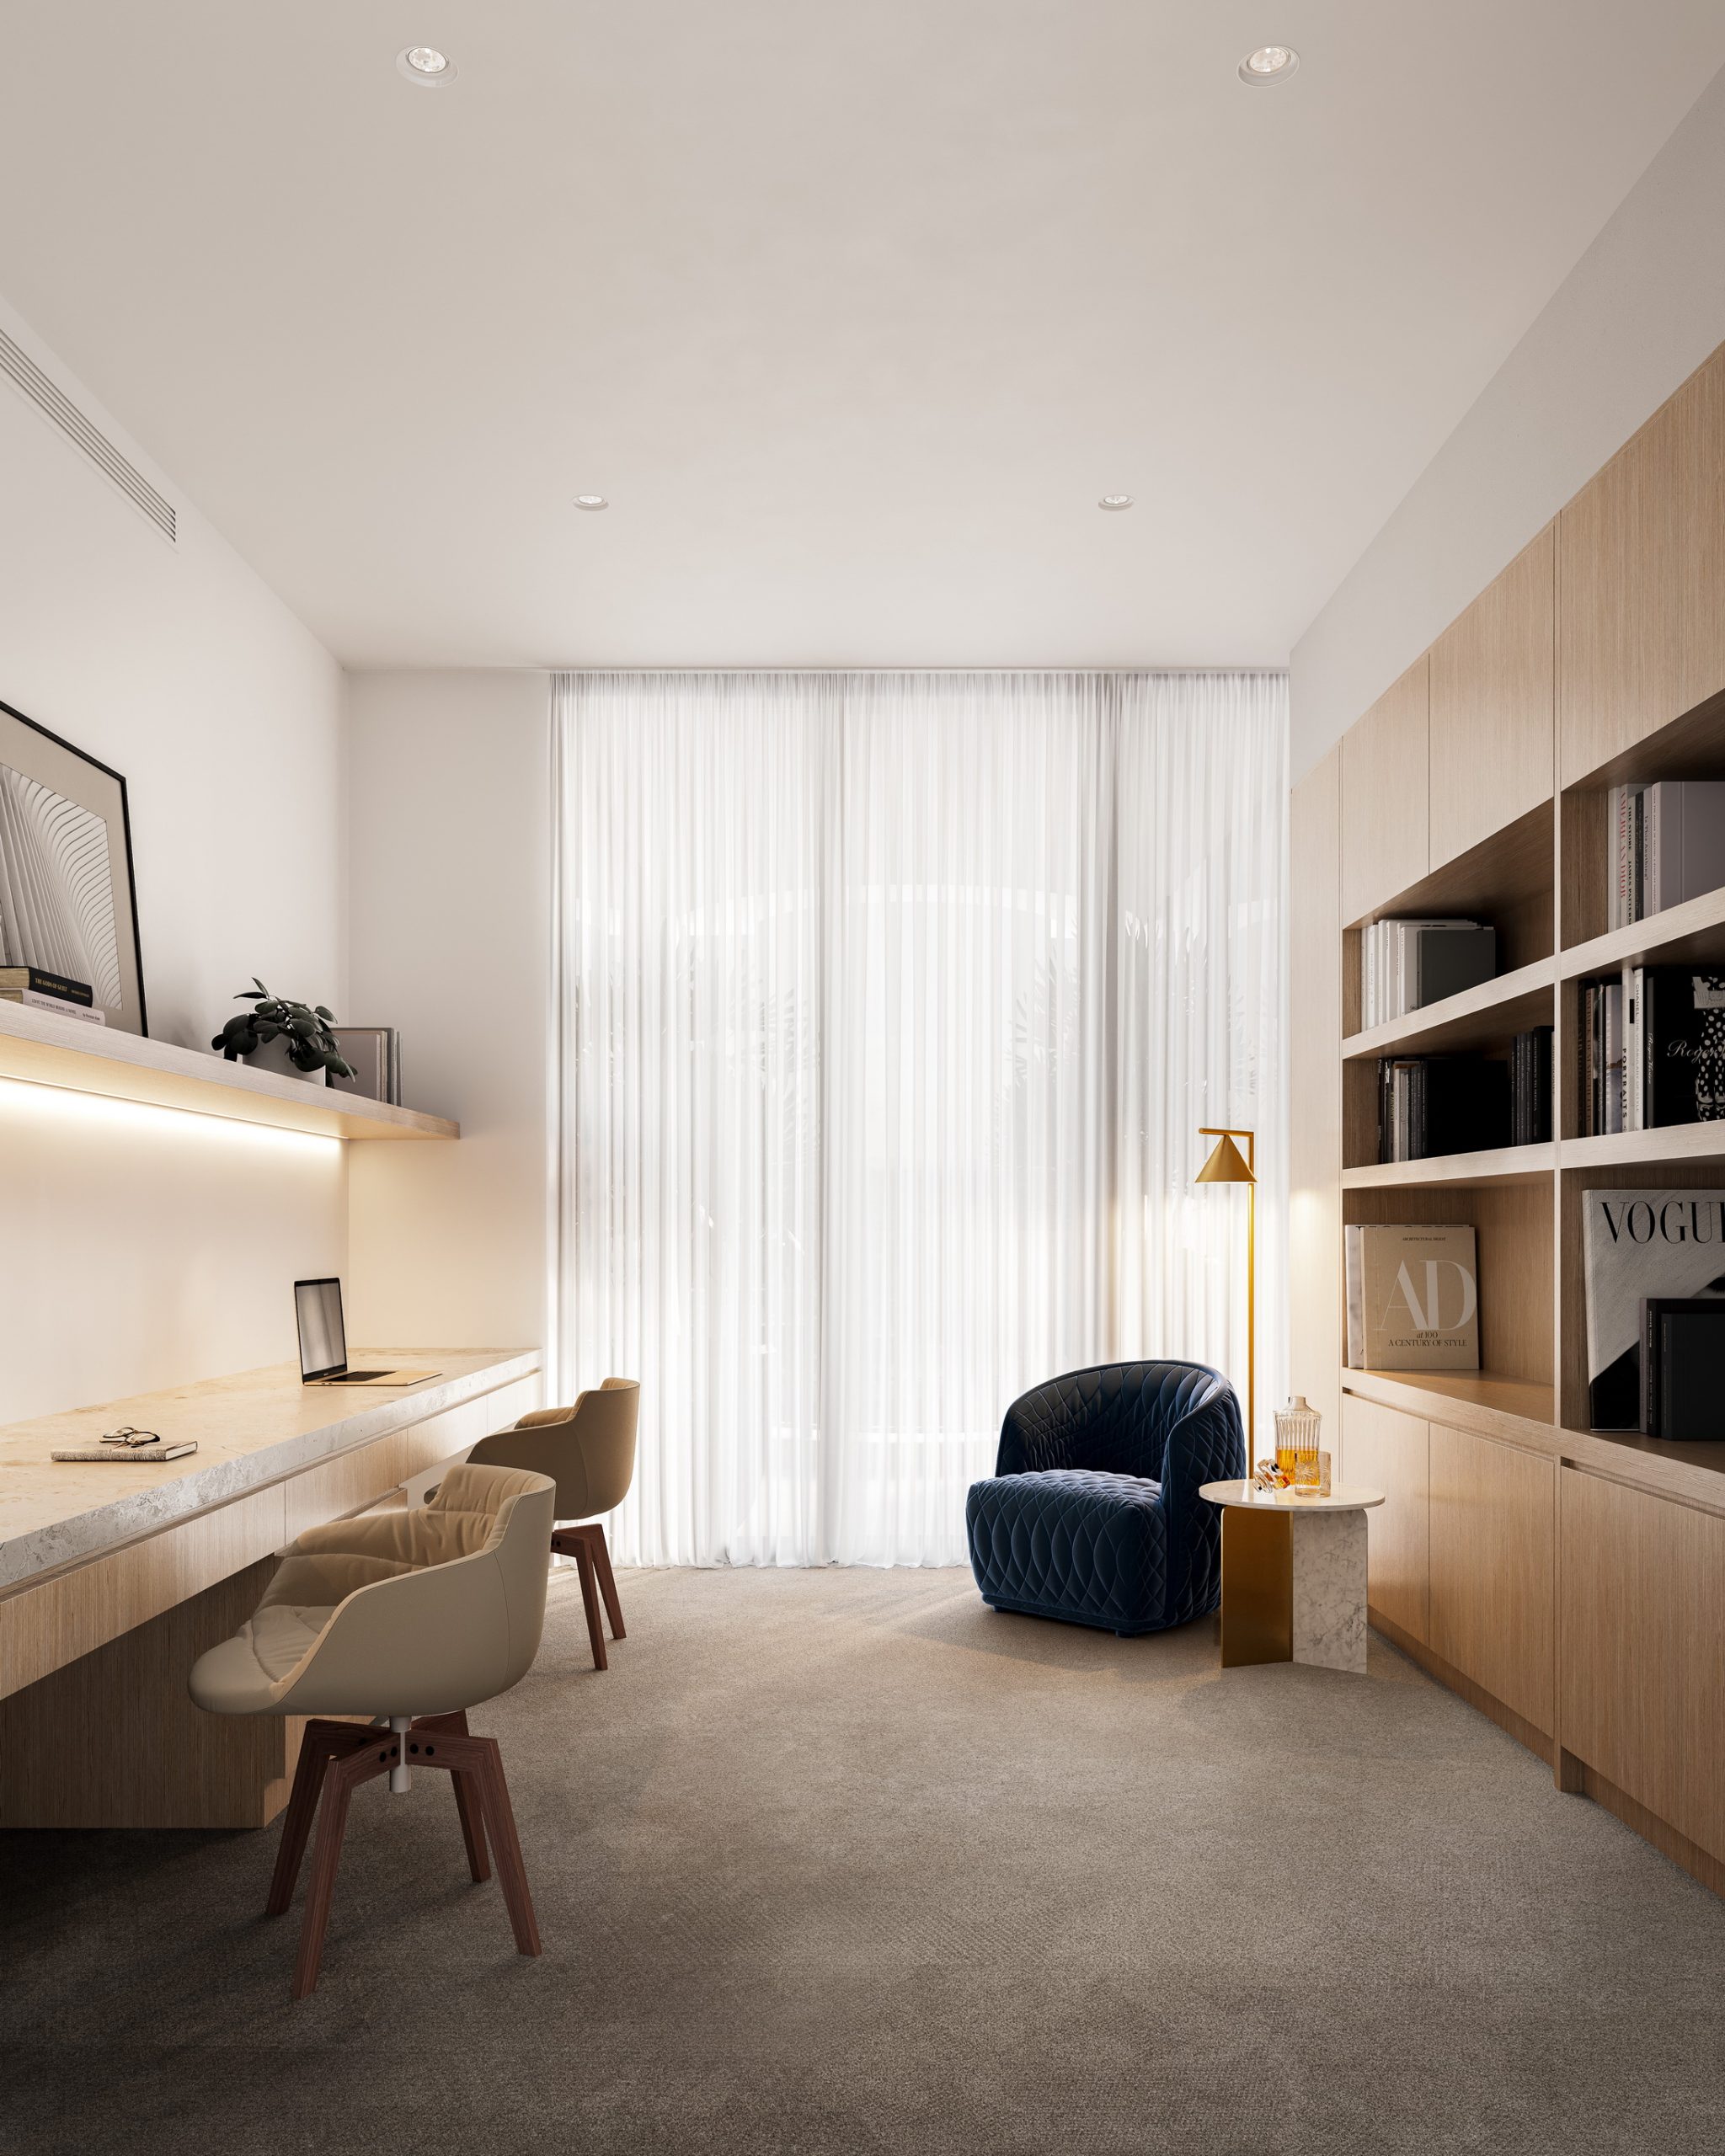 Rivello-queensland-render-3d-fkd-studio-architecture-luxury-home-office